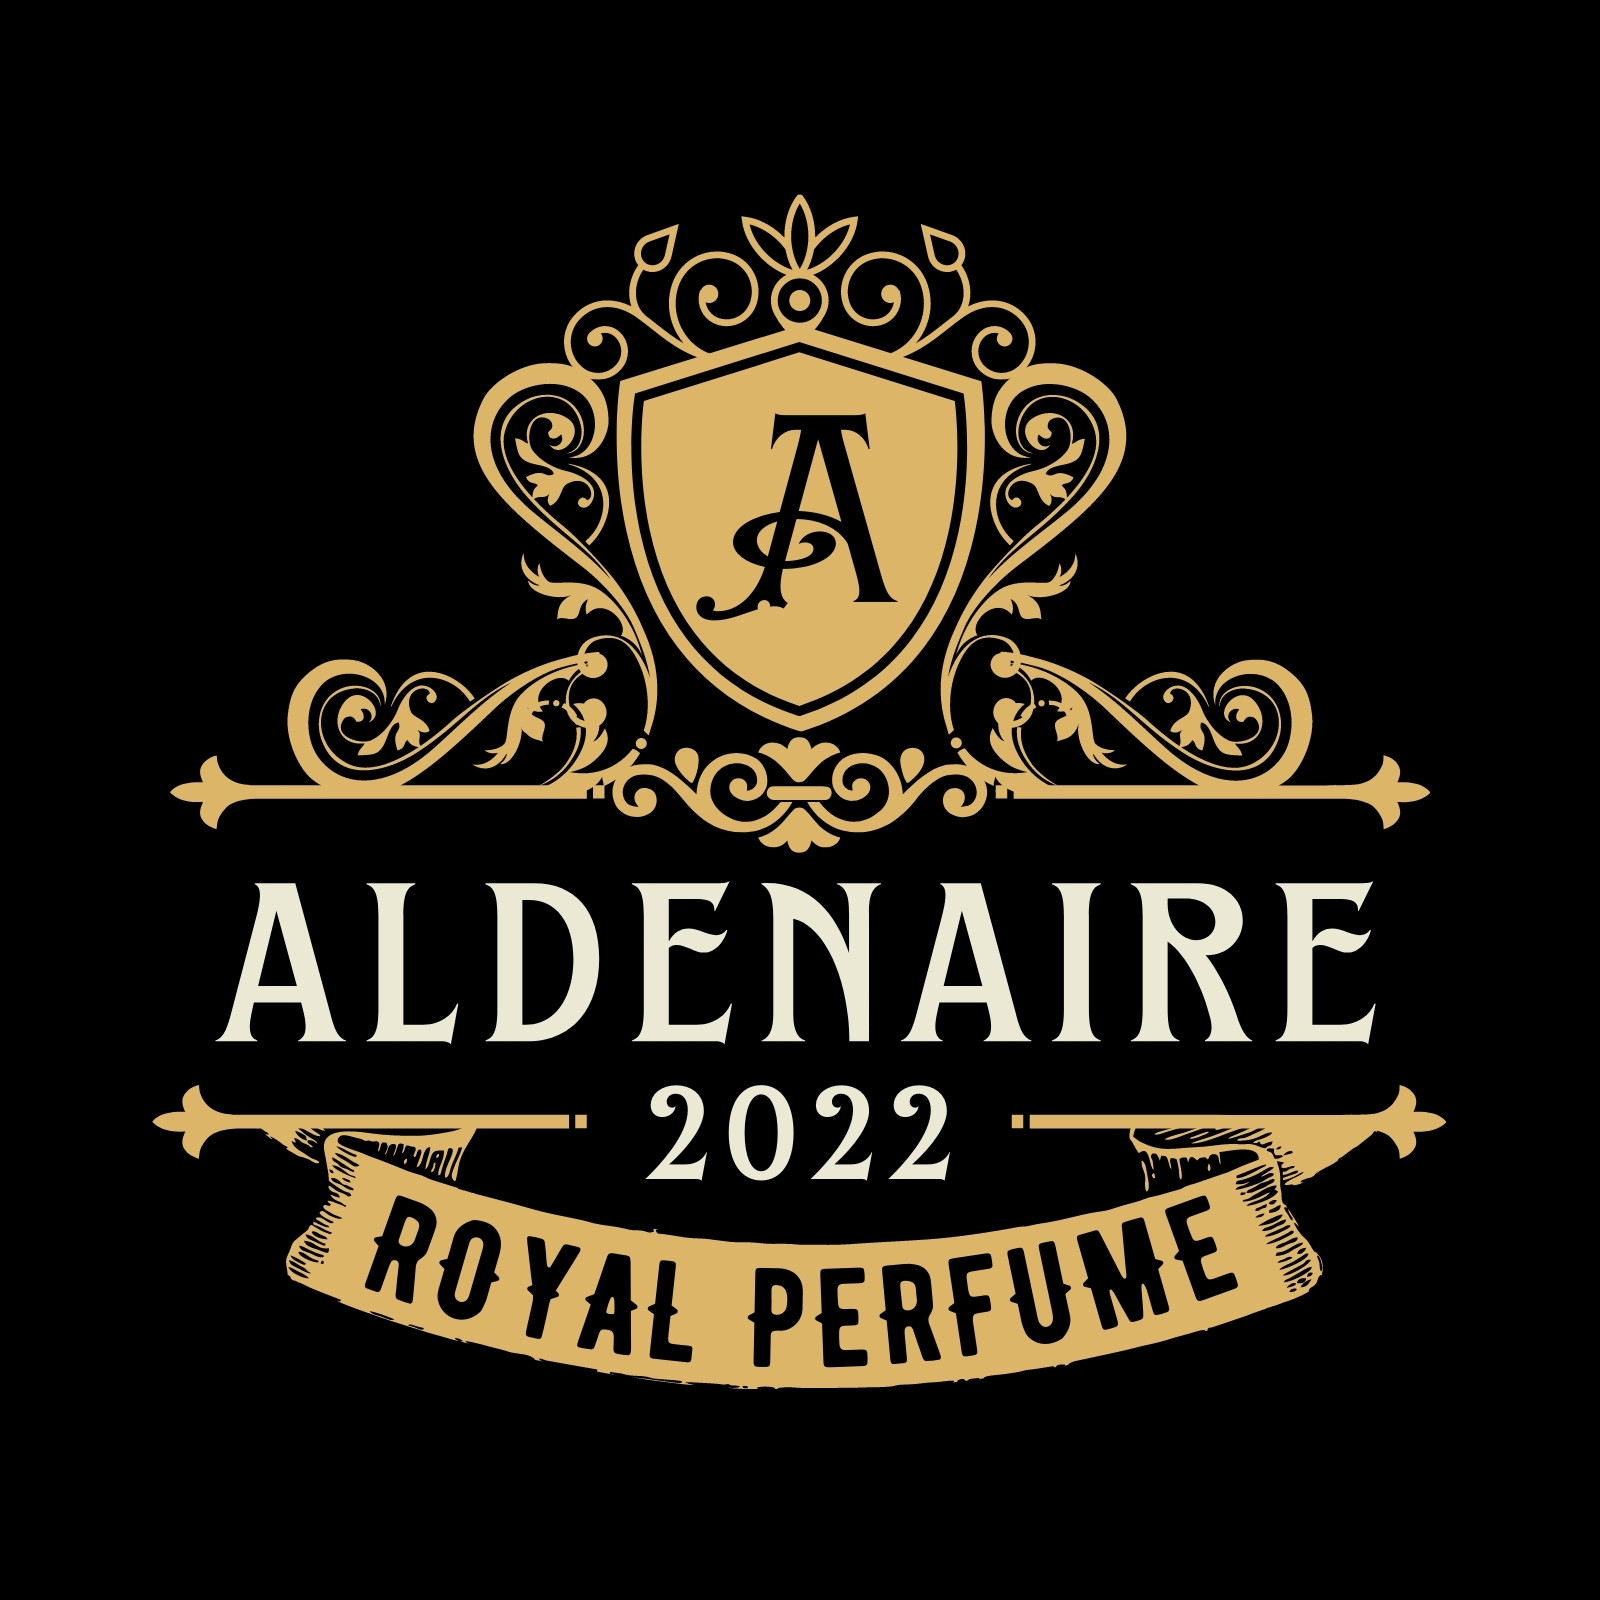 Free Vector  Luxury design for perfume logo